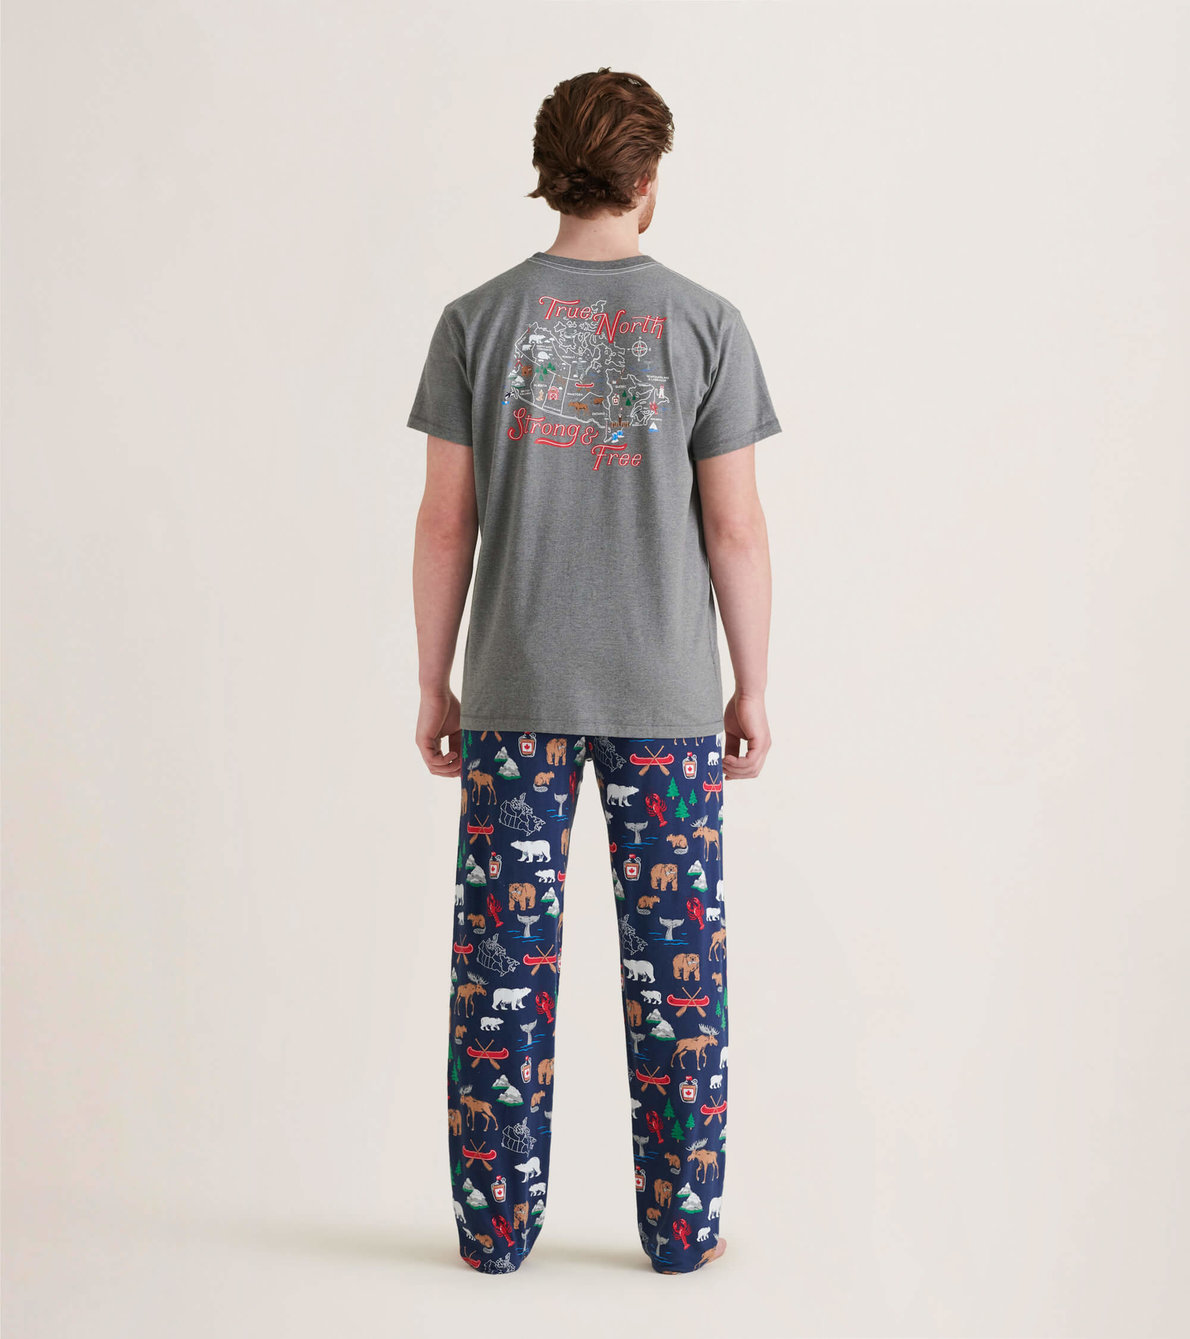 View larger image of True North Men's Jersey Pajama Pants